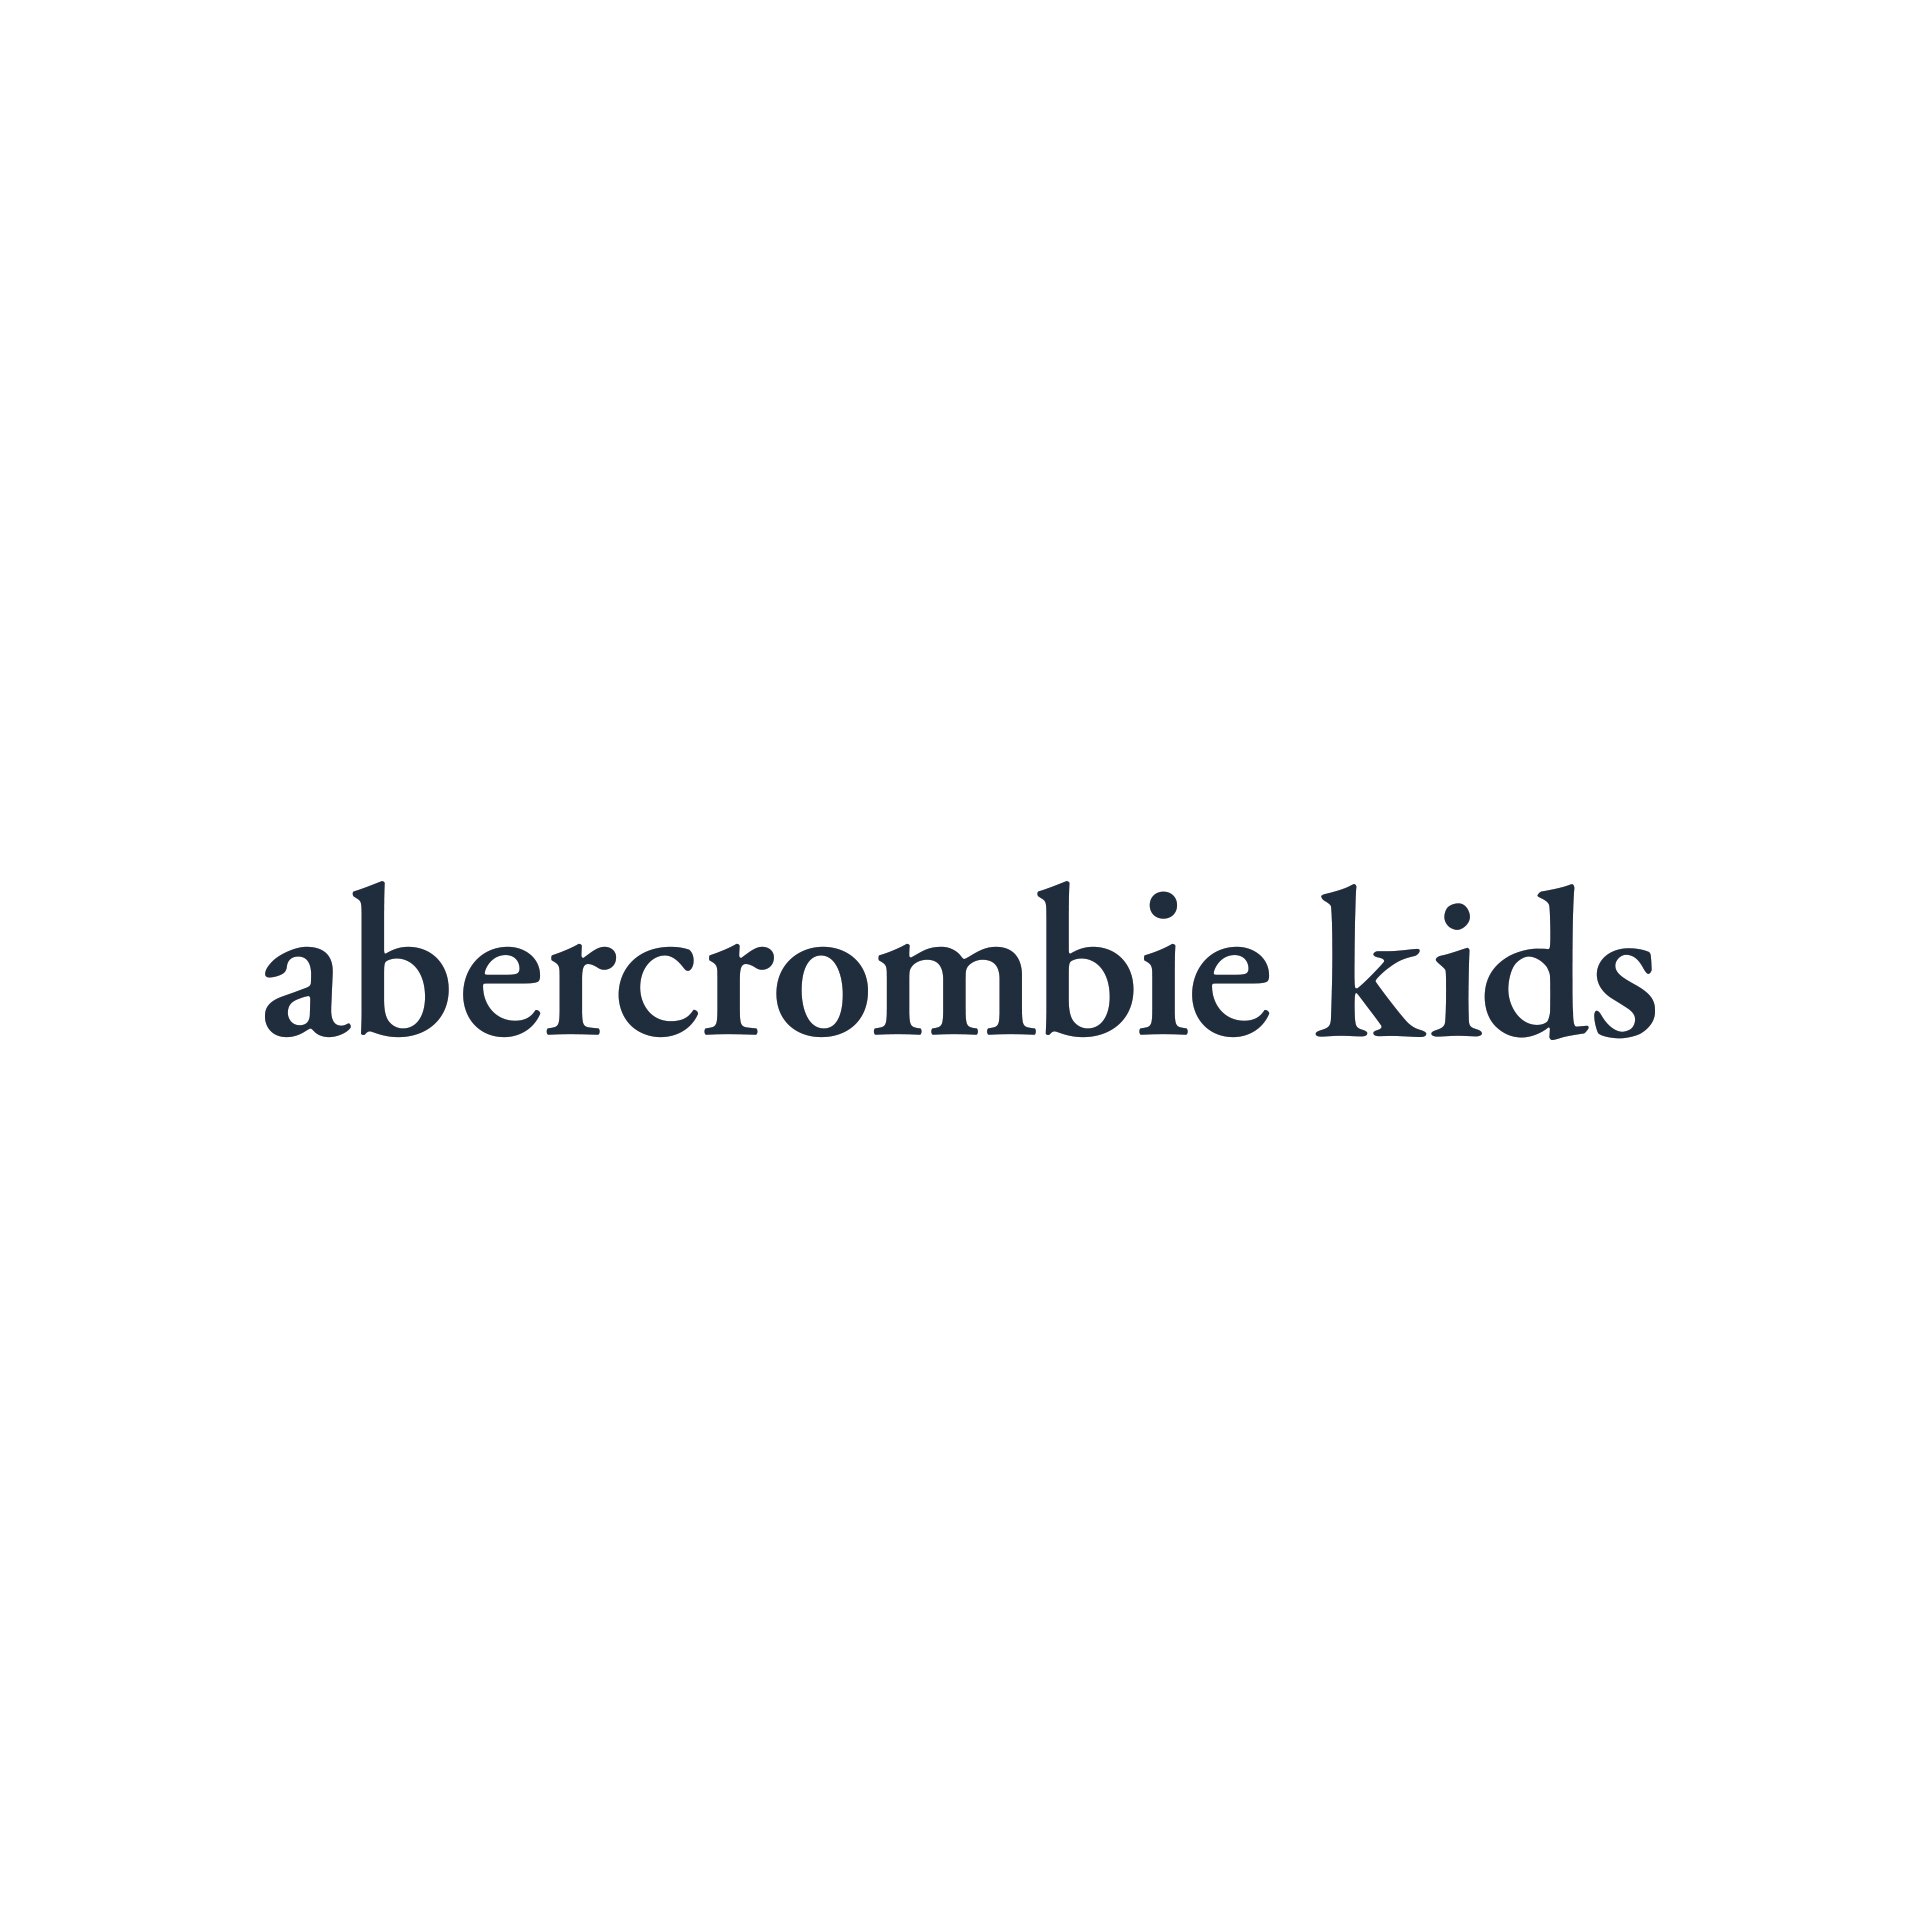 abercrombie kids number